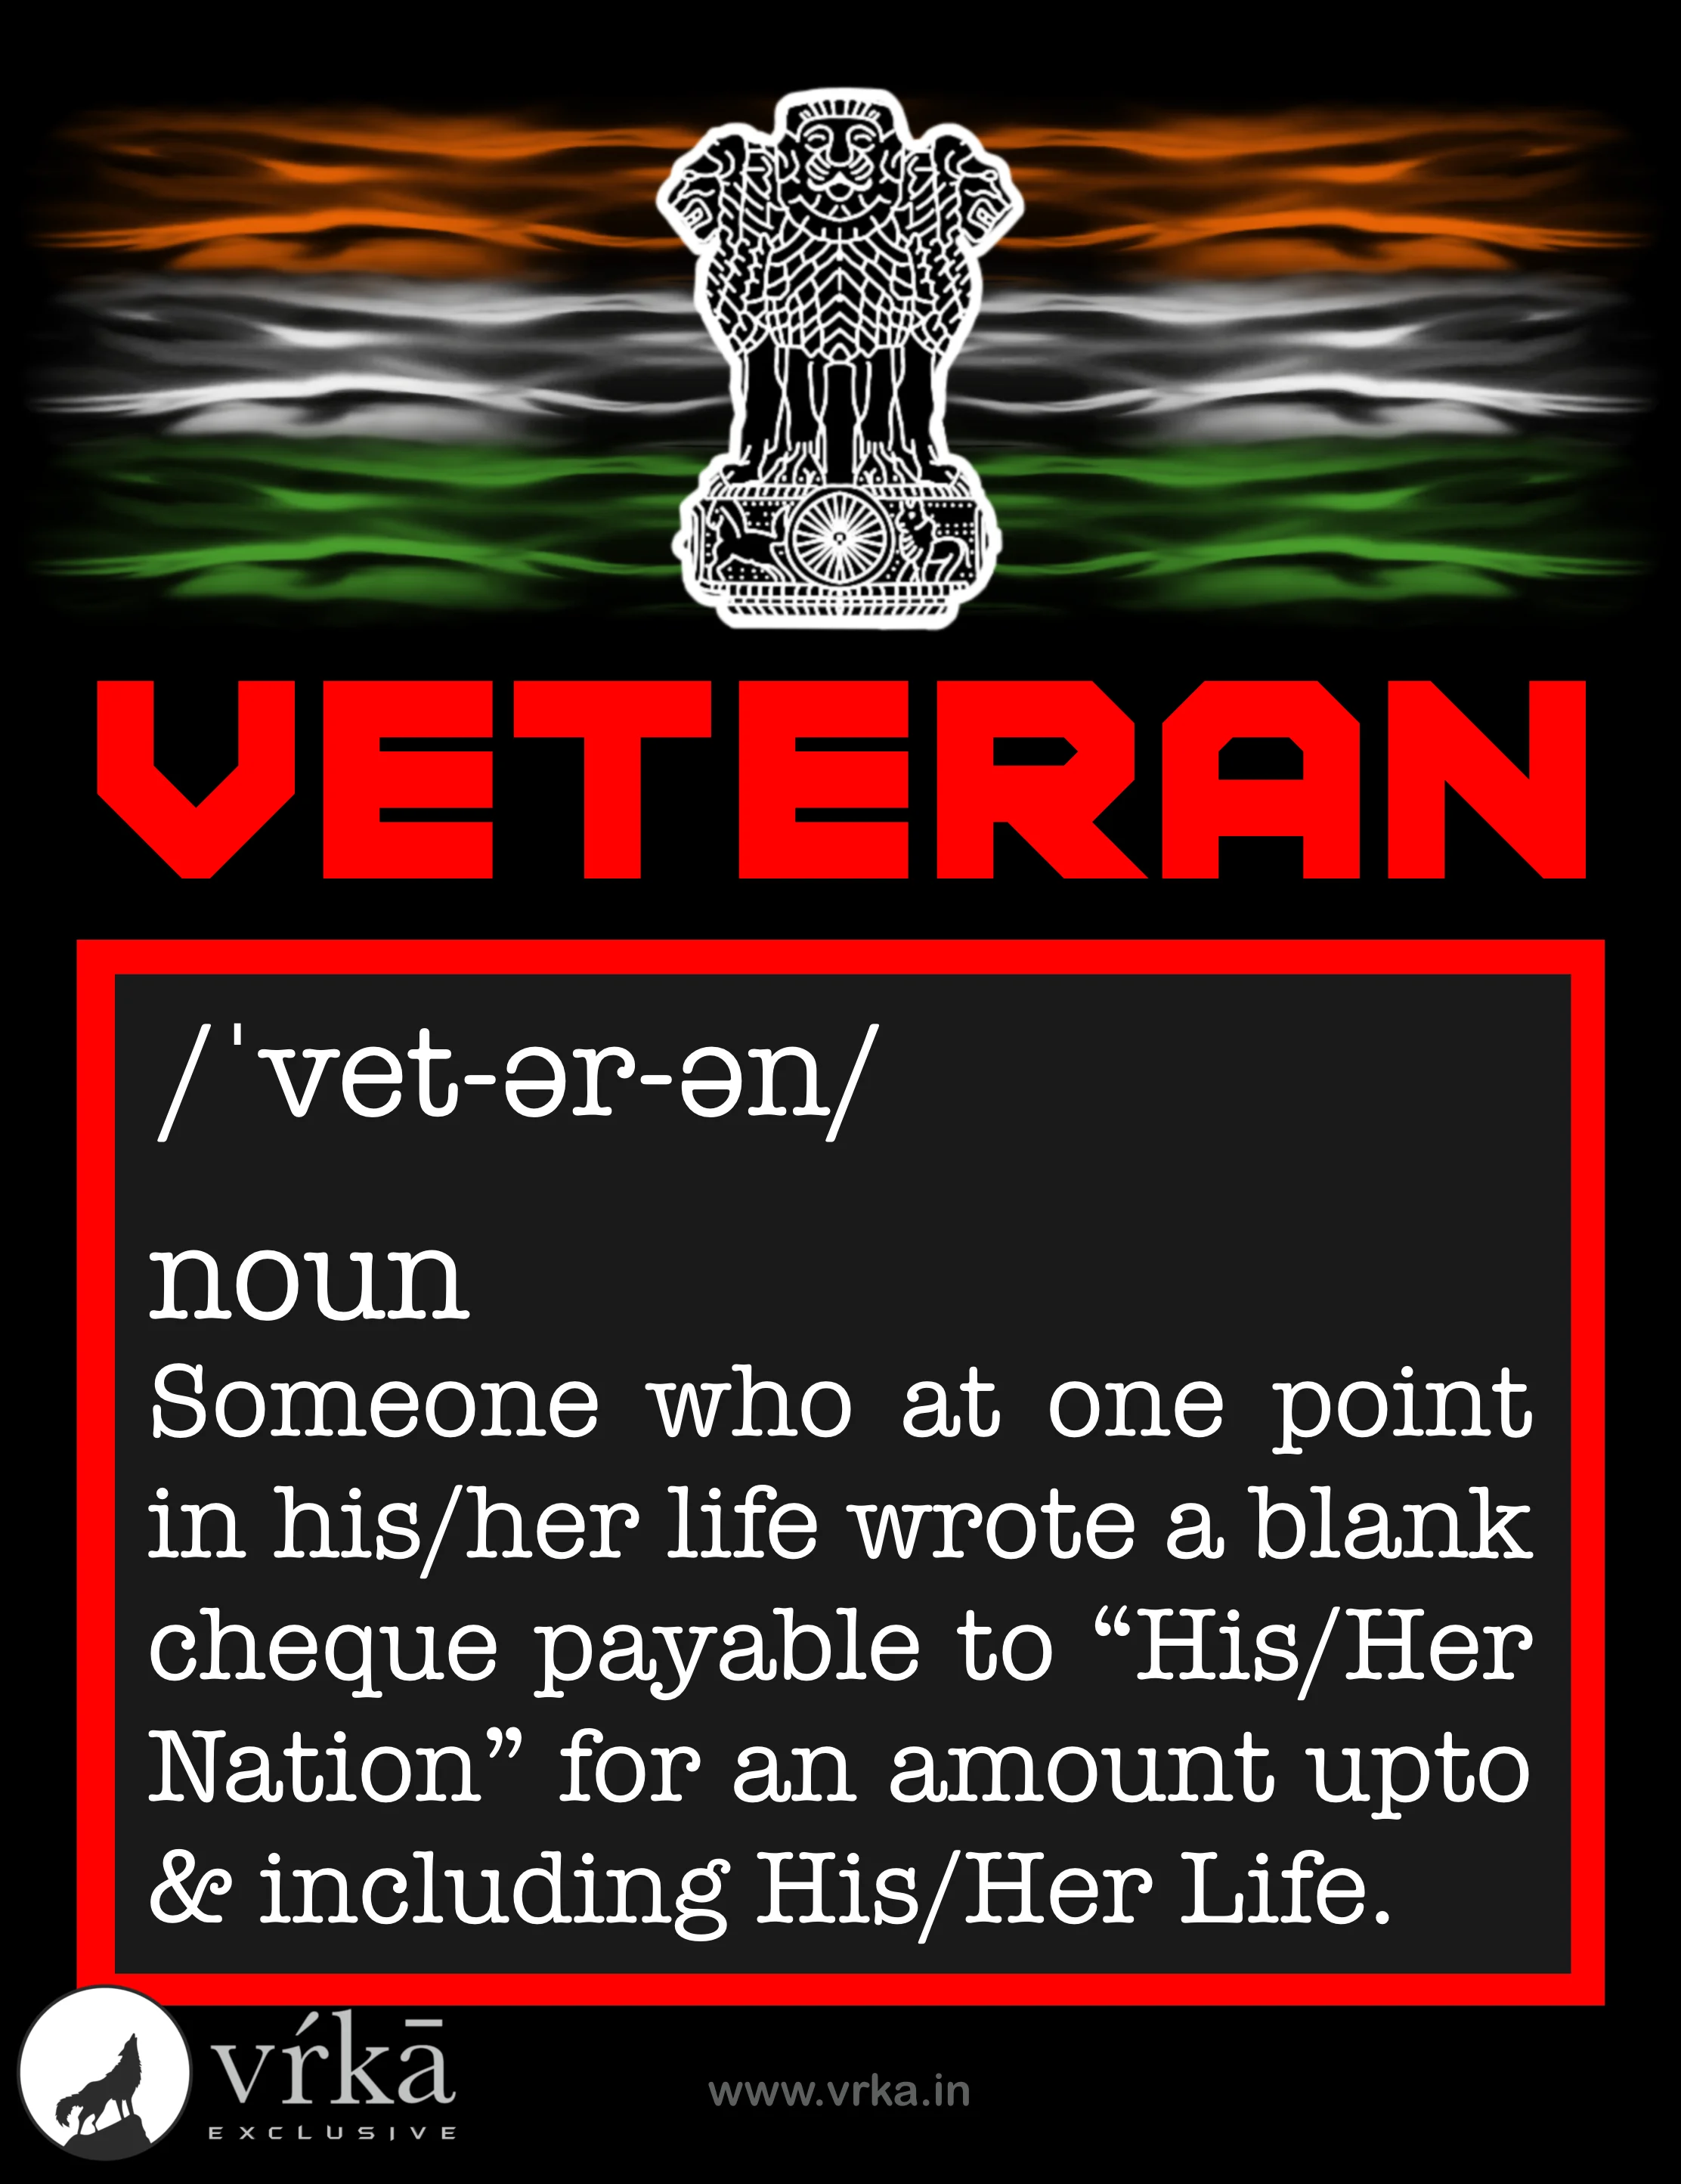 Featured image for “Veteran Description”